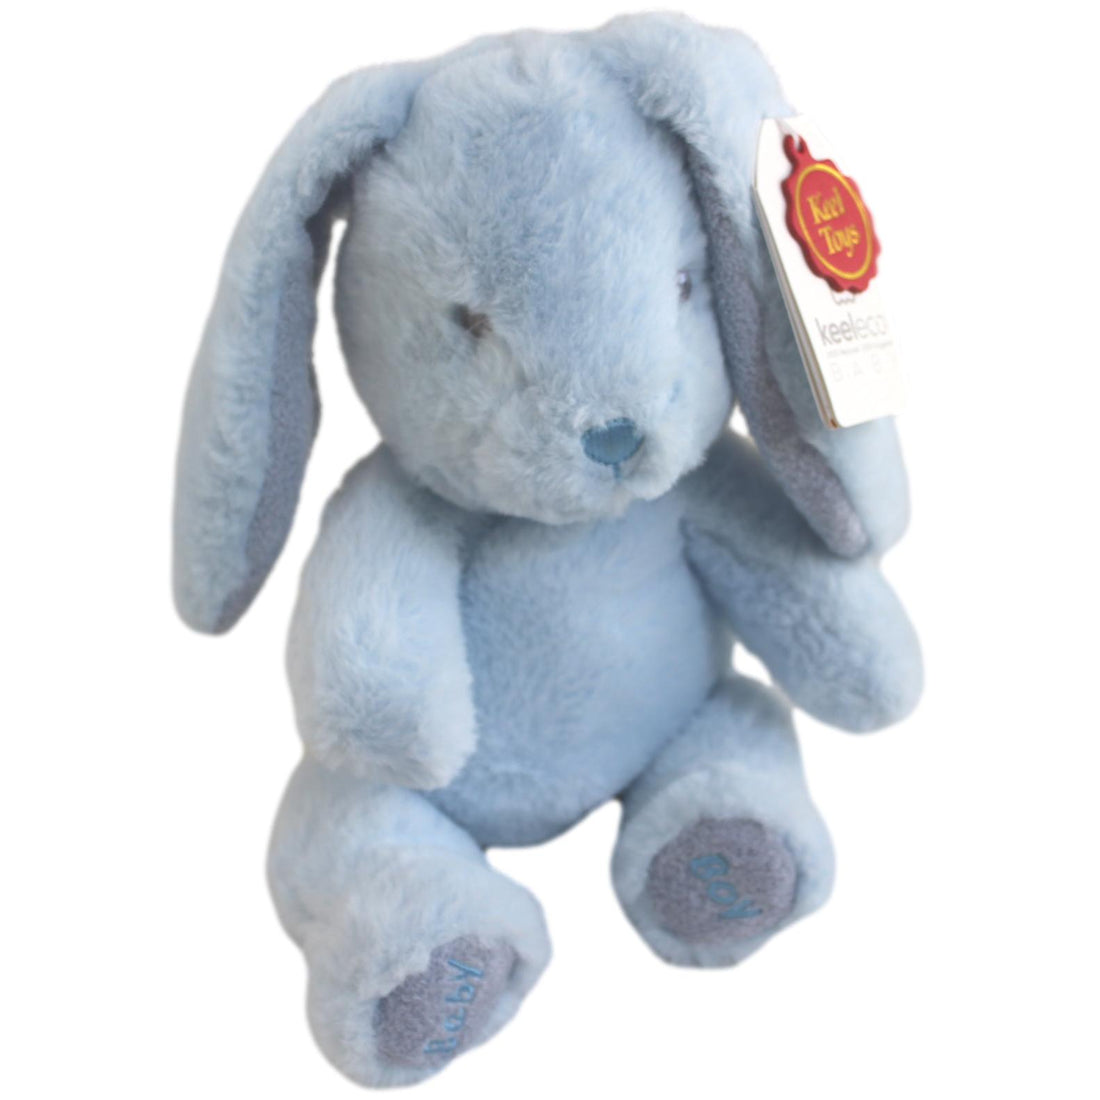 Eco Baby Keel Blue Bunny Teddy